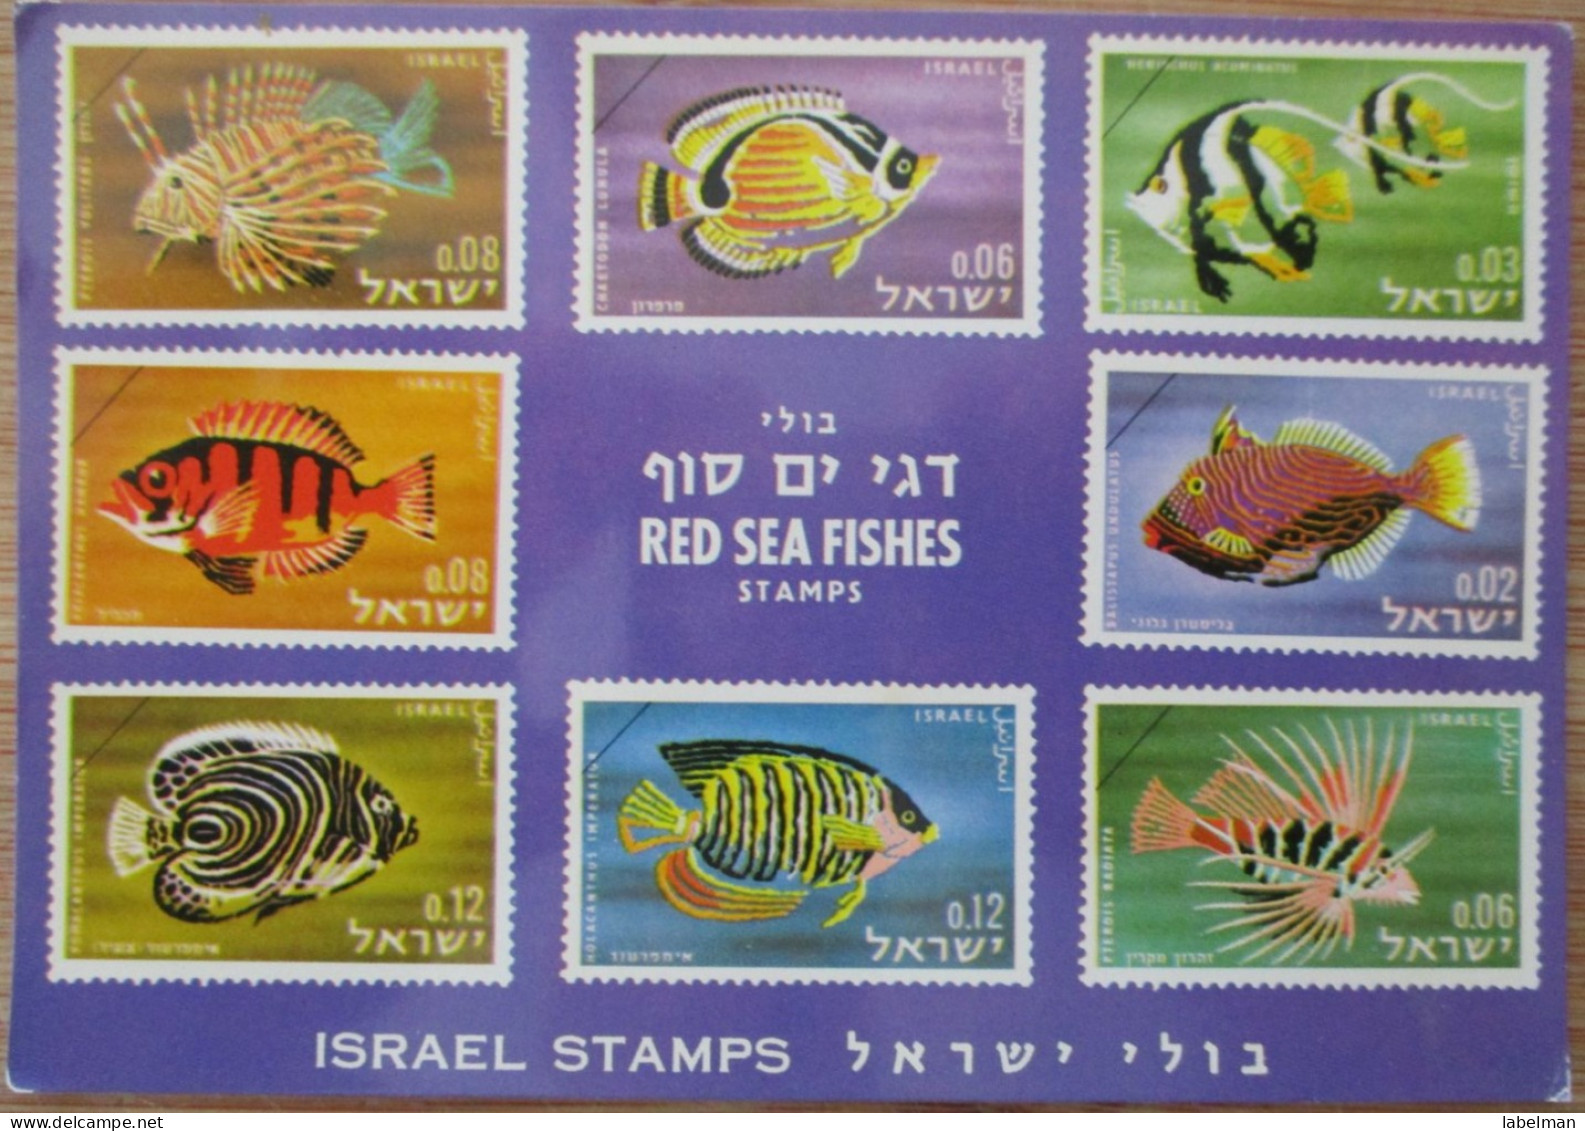 ISRAEL EGYPT EILAT SINAI DESERT RED SEA UNDERWATER OBSERVATORY FISH STAMP POSTCARD PHOTO POST CARD PC STAMP - Israel